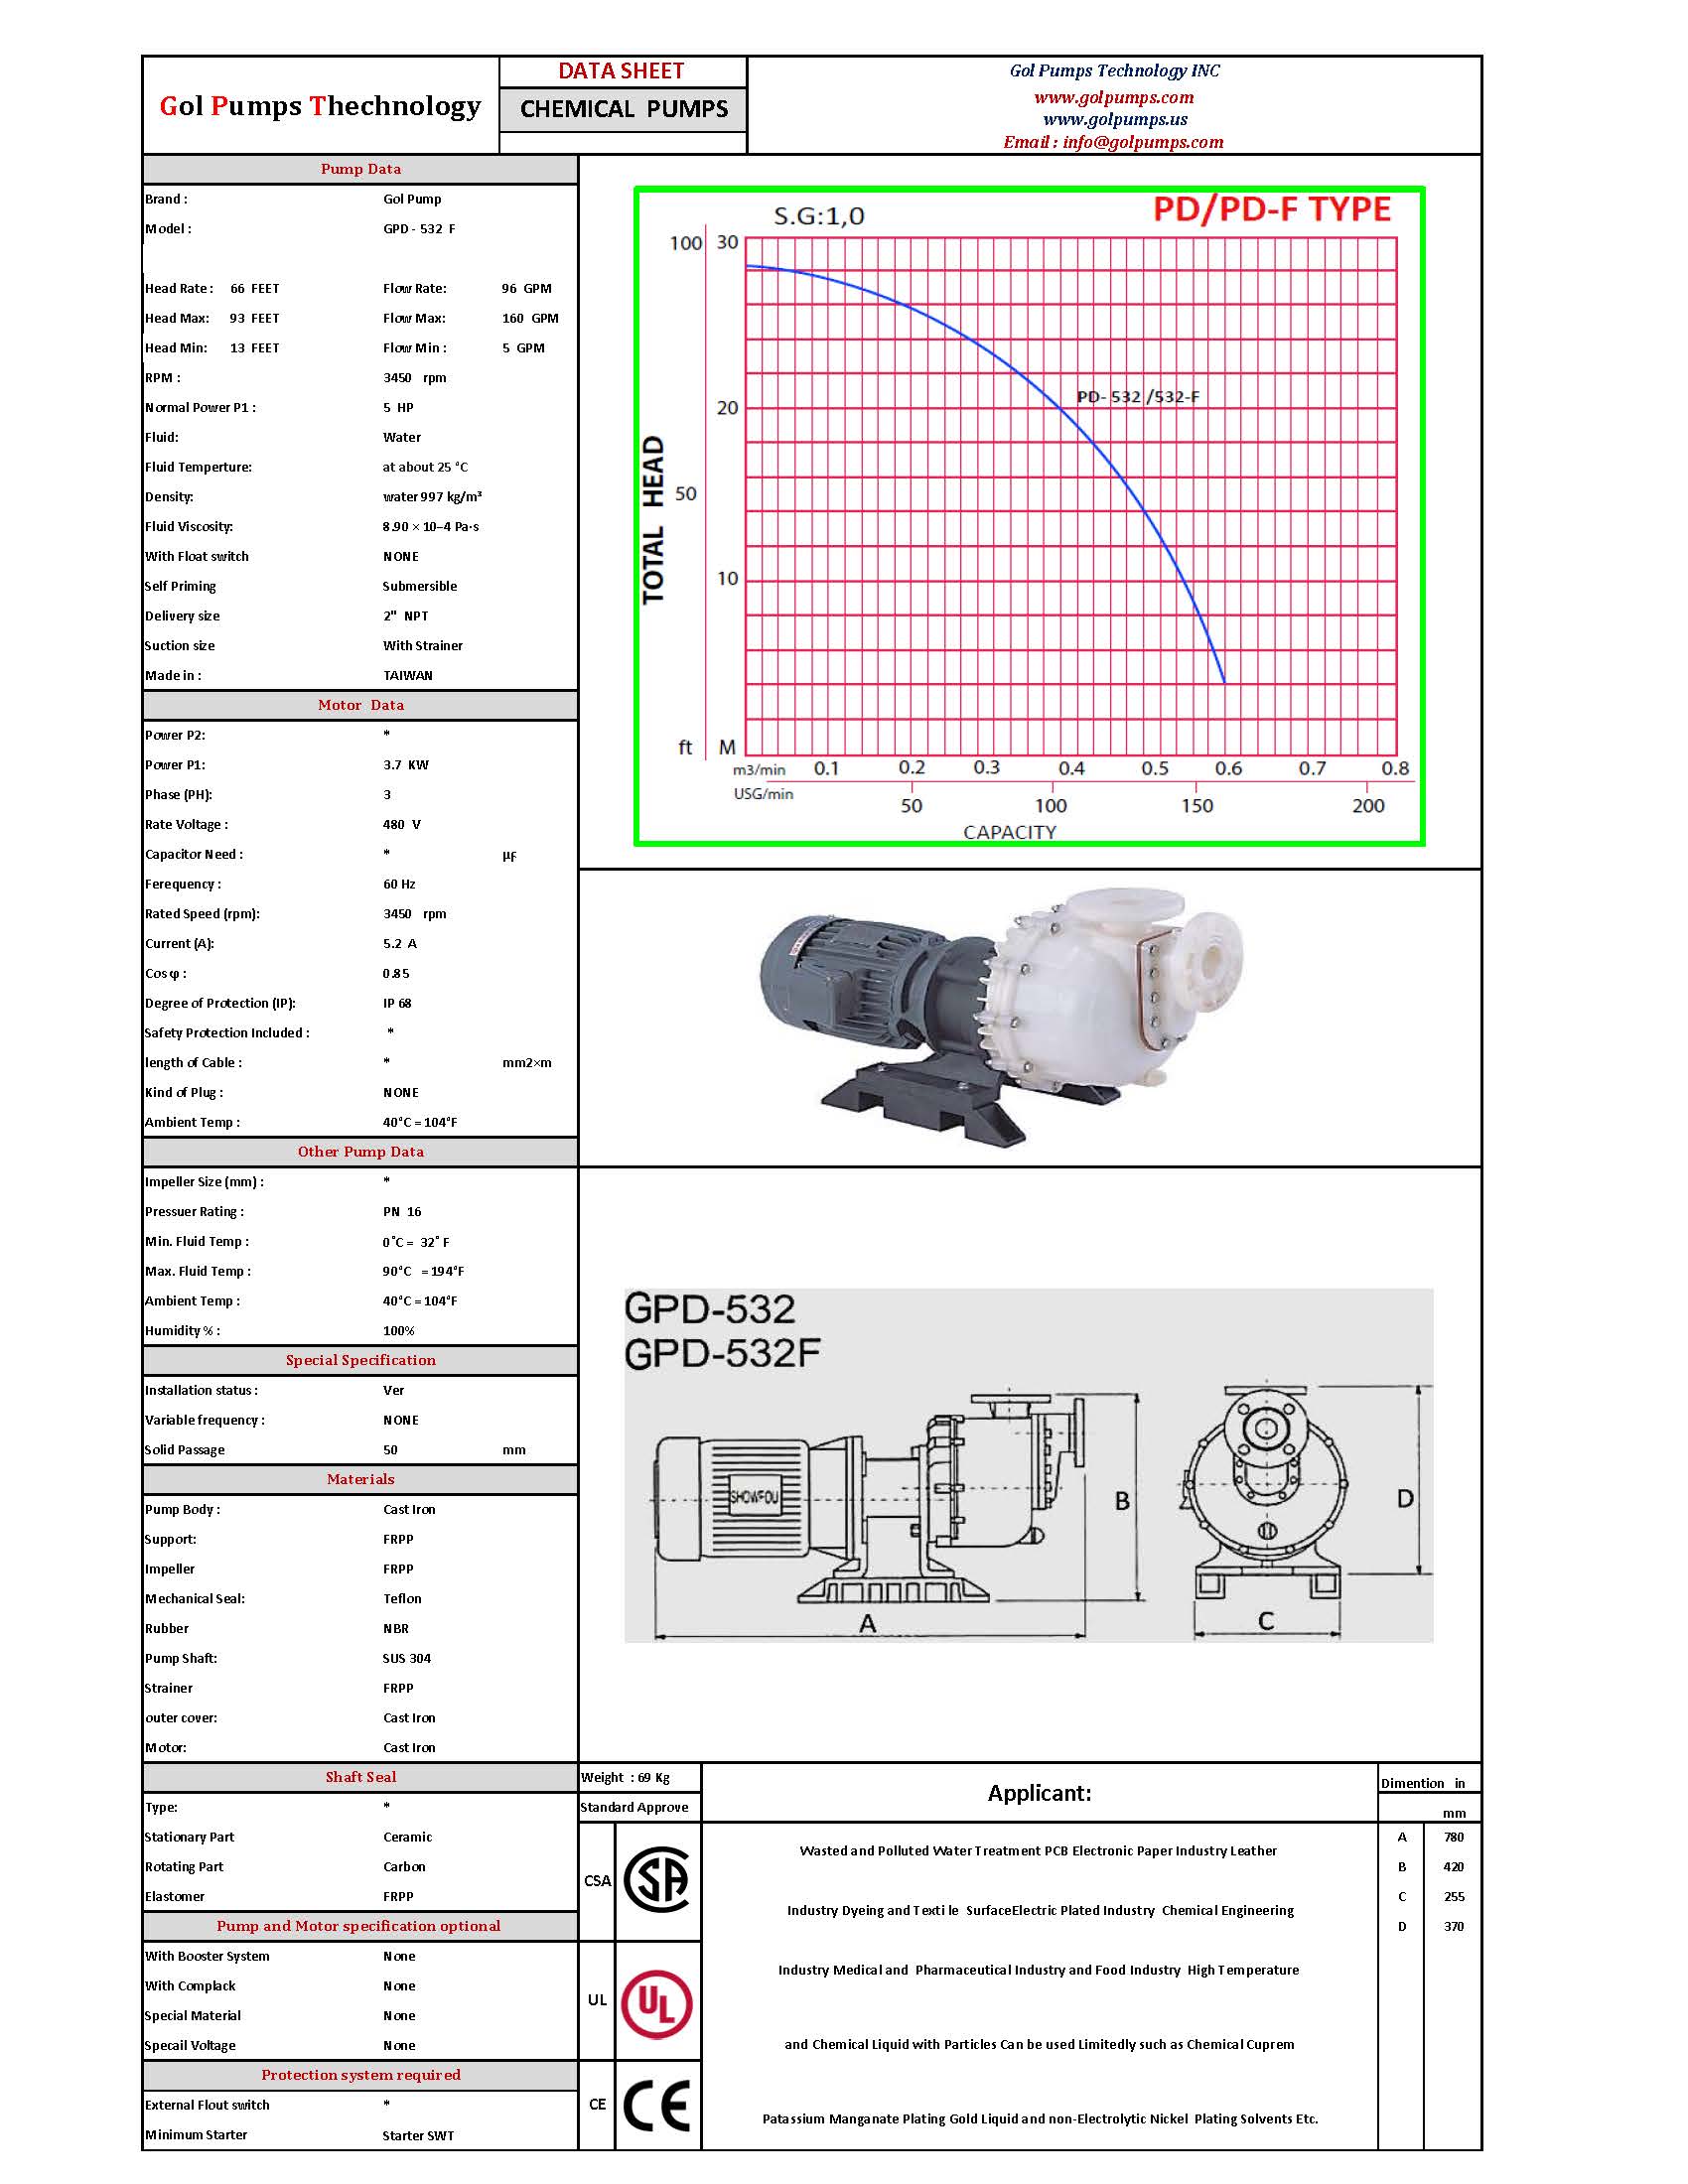 GPD-532F Chemical Pump - Data Sheet